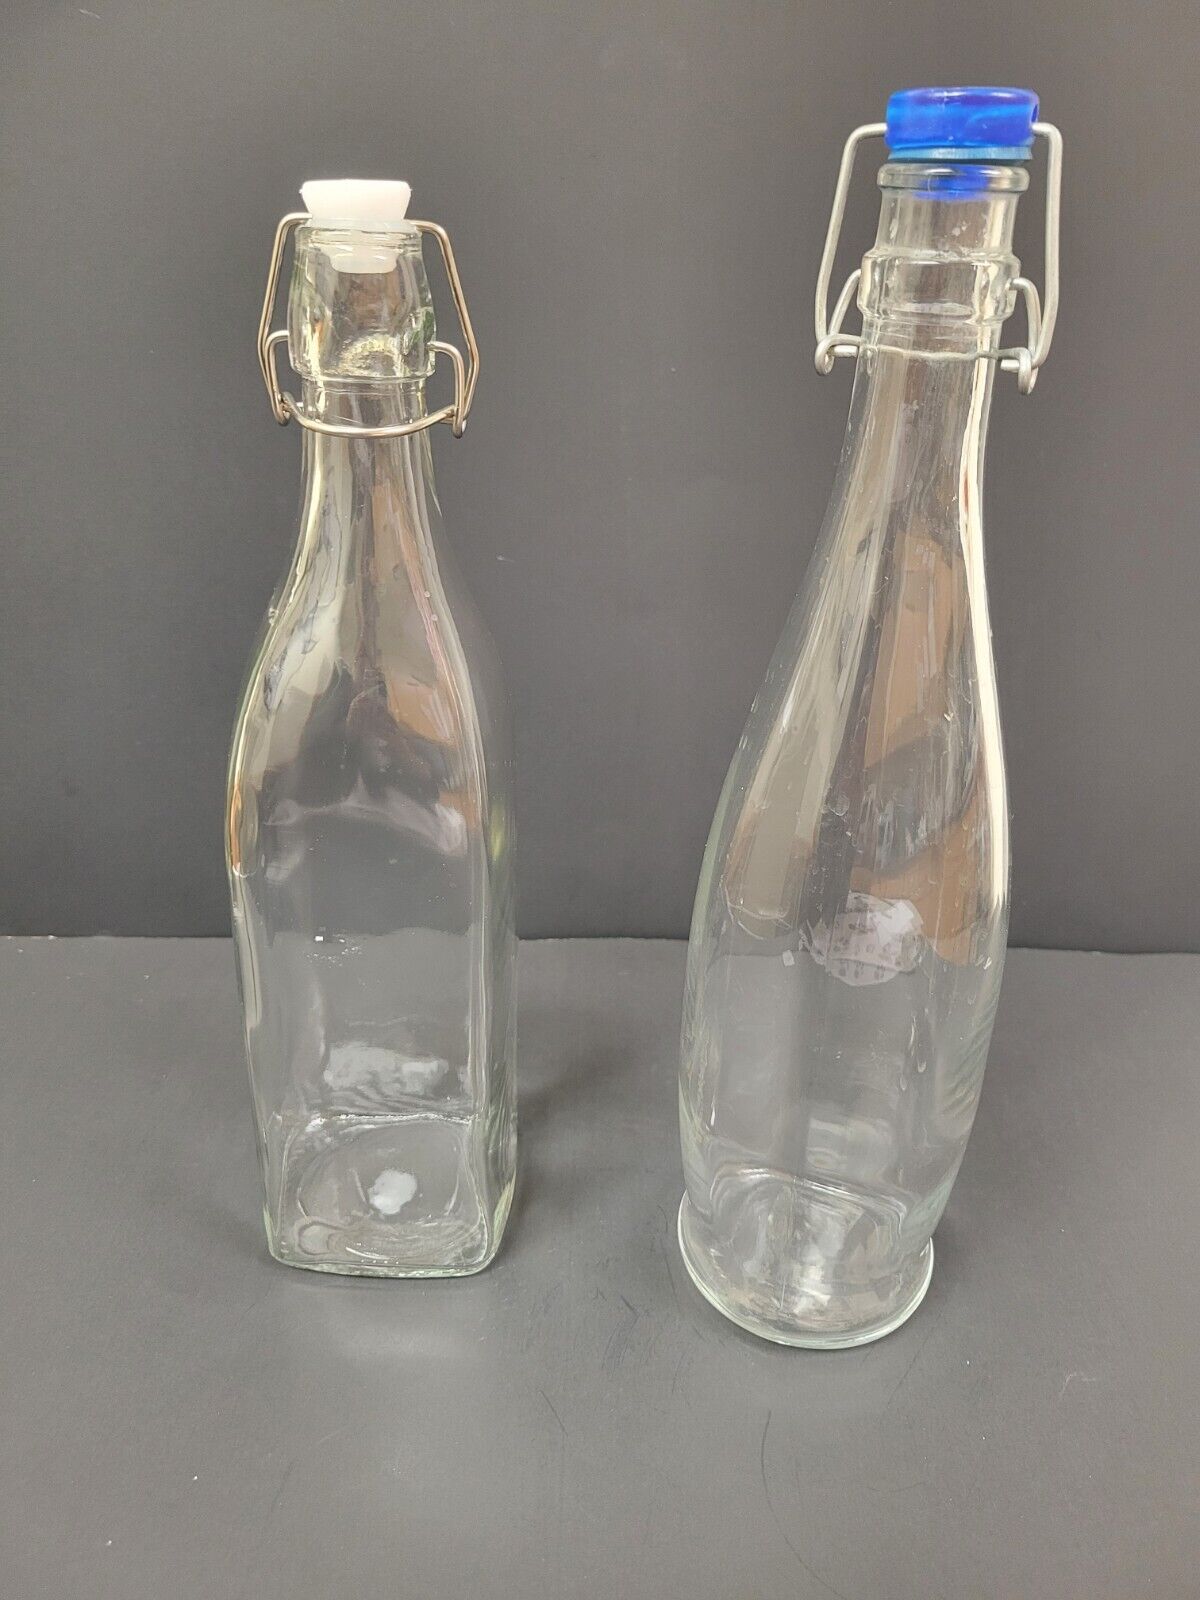 Vintage Italy Flip Top Bottles